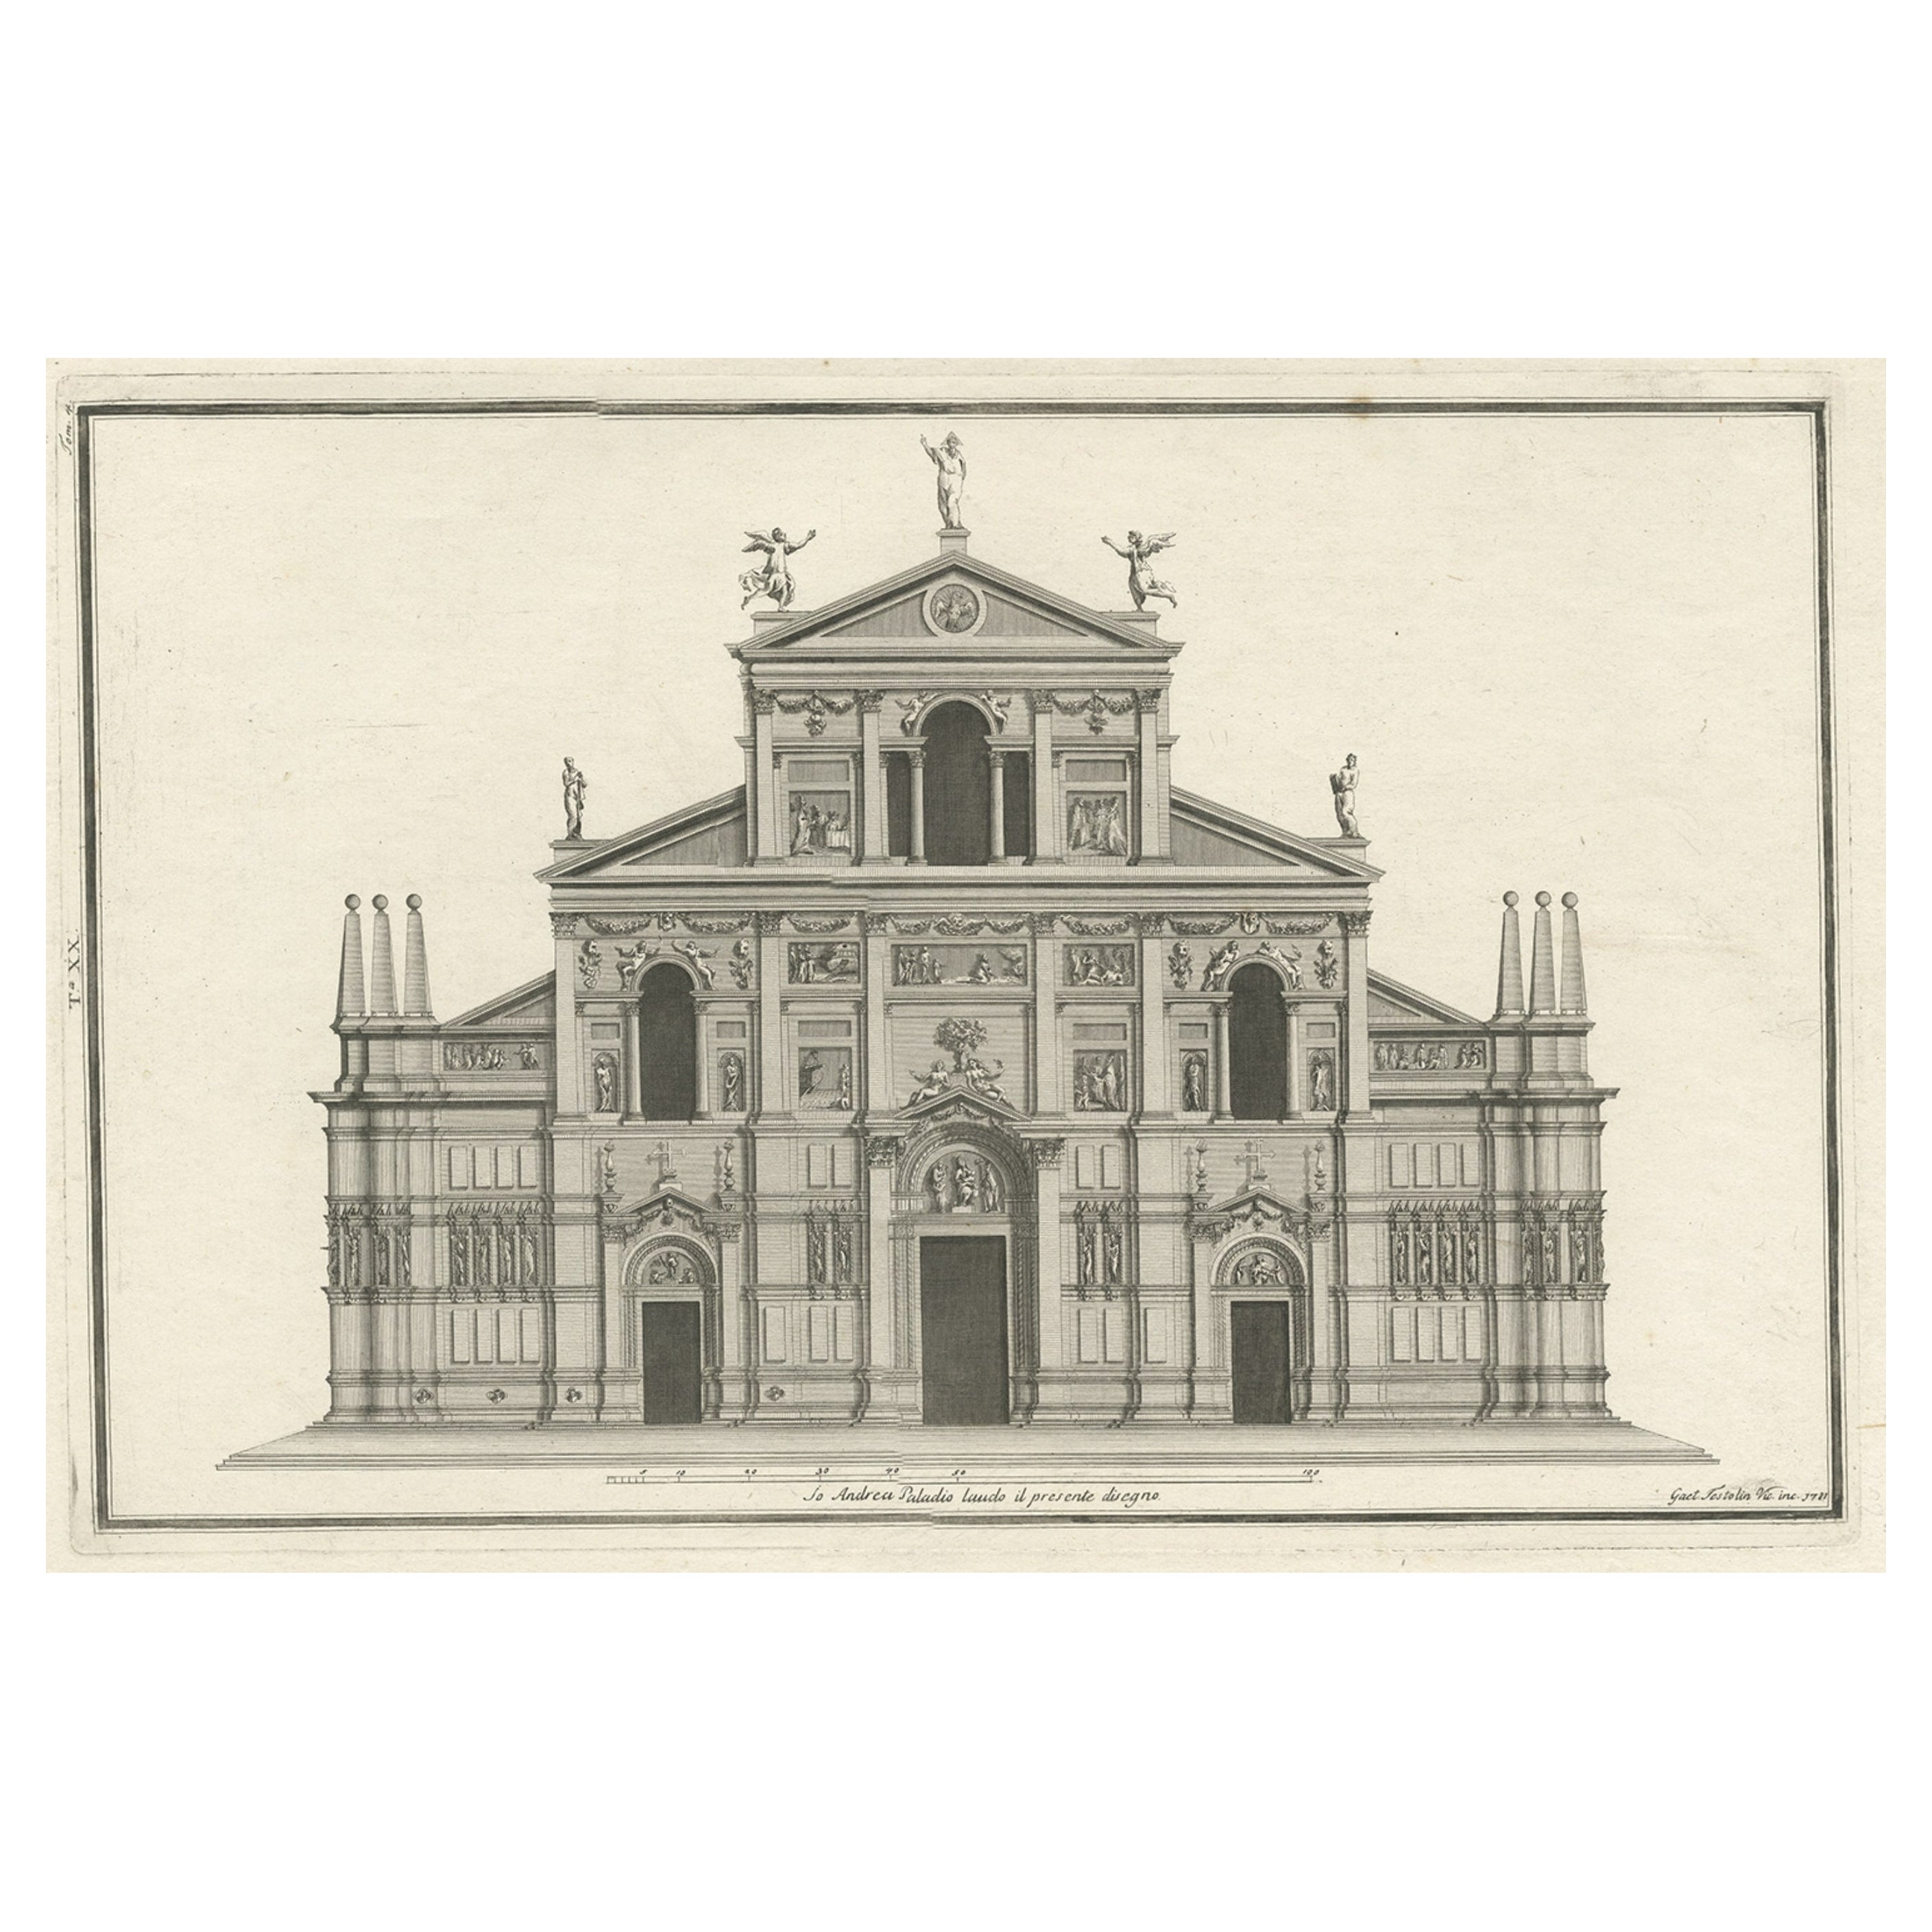 Old Print Showing the Facade of Basilica Di San Petronio in Bologna, Italy, 1783